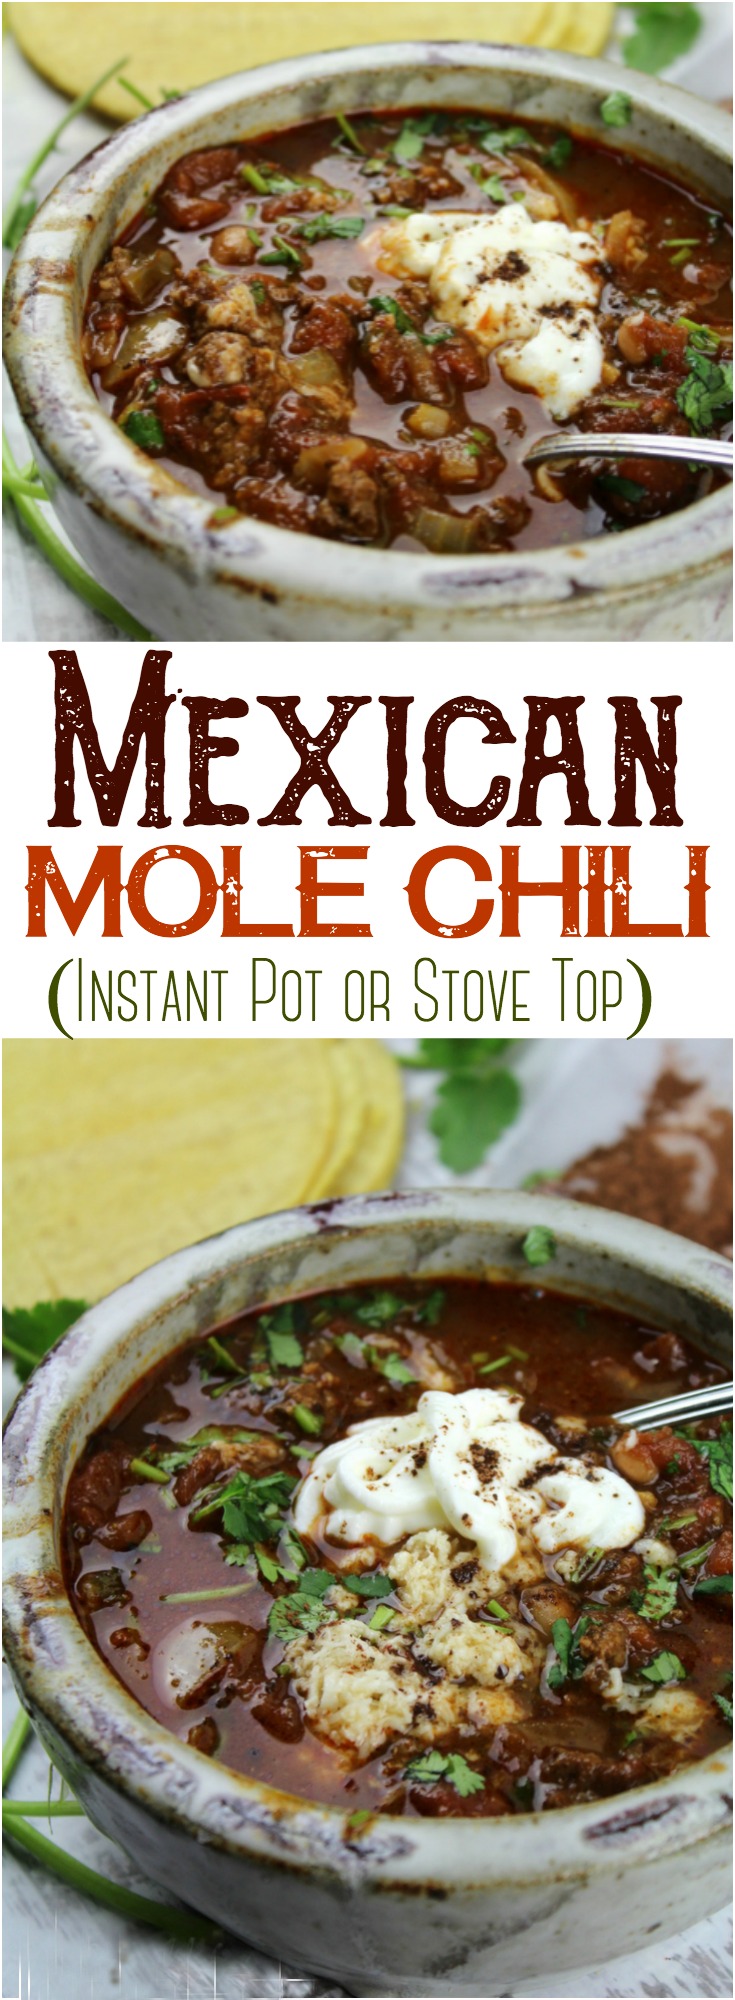 Mole Chili (Instant Pot or Stove Top) | The CentsAble Shoppin